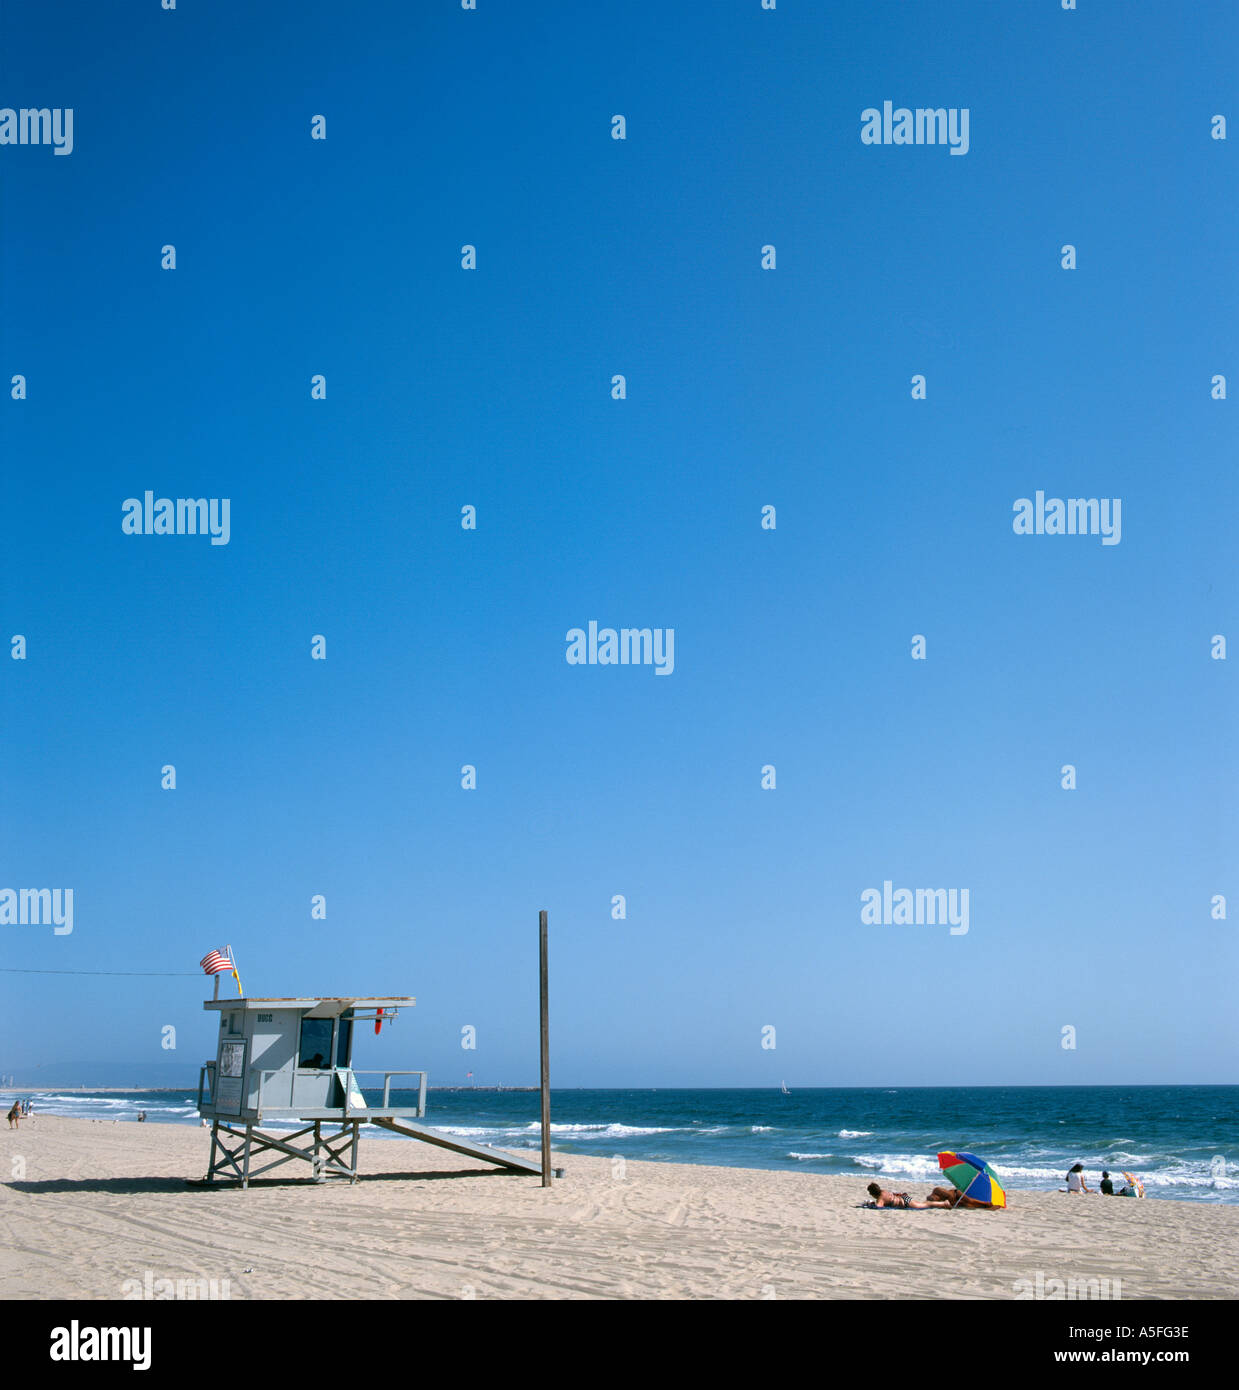 Venice Beach, Santa Monica, Los Angeles, Californie, USA Banque D'Images